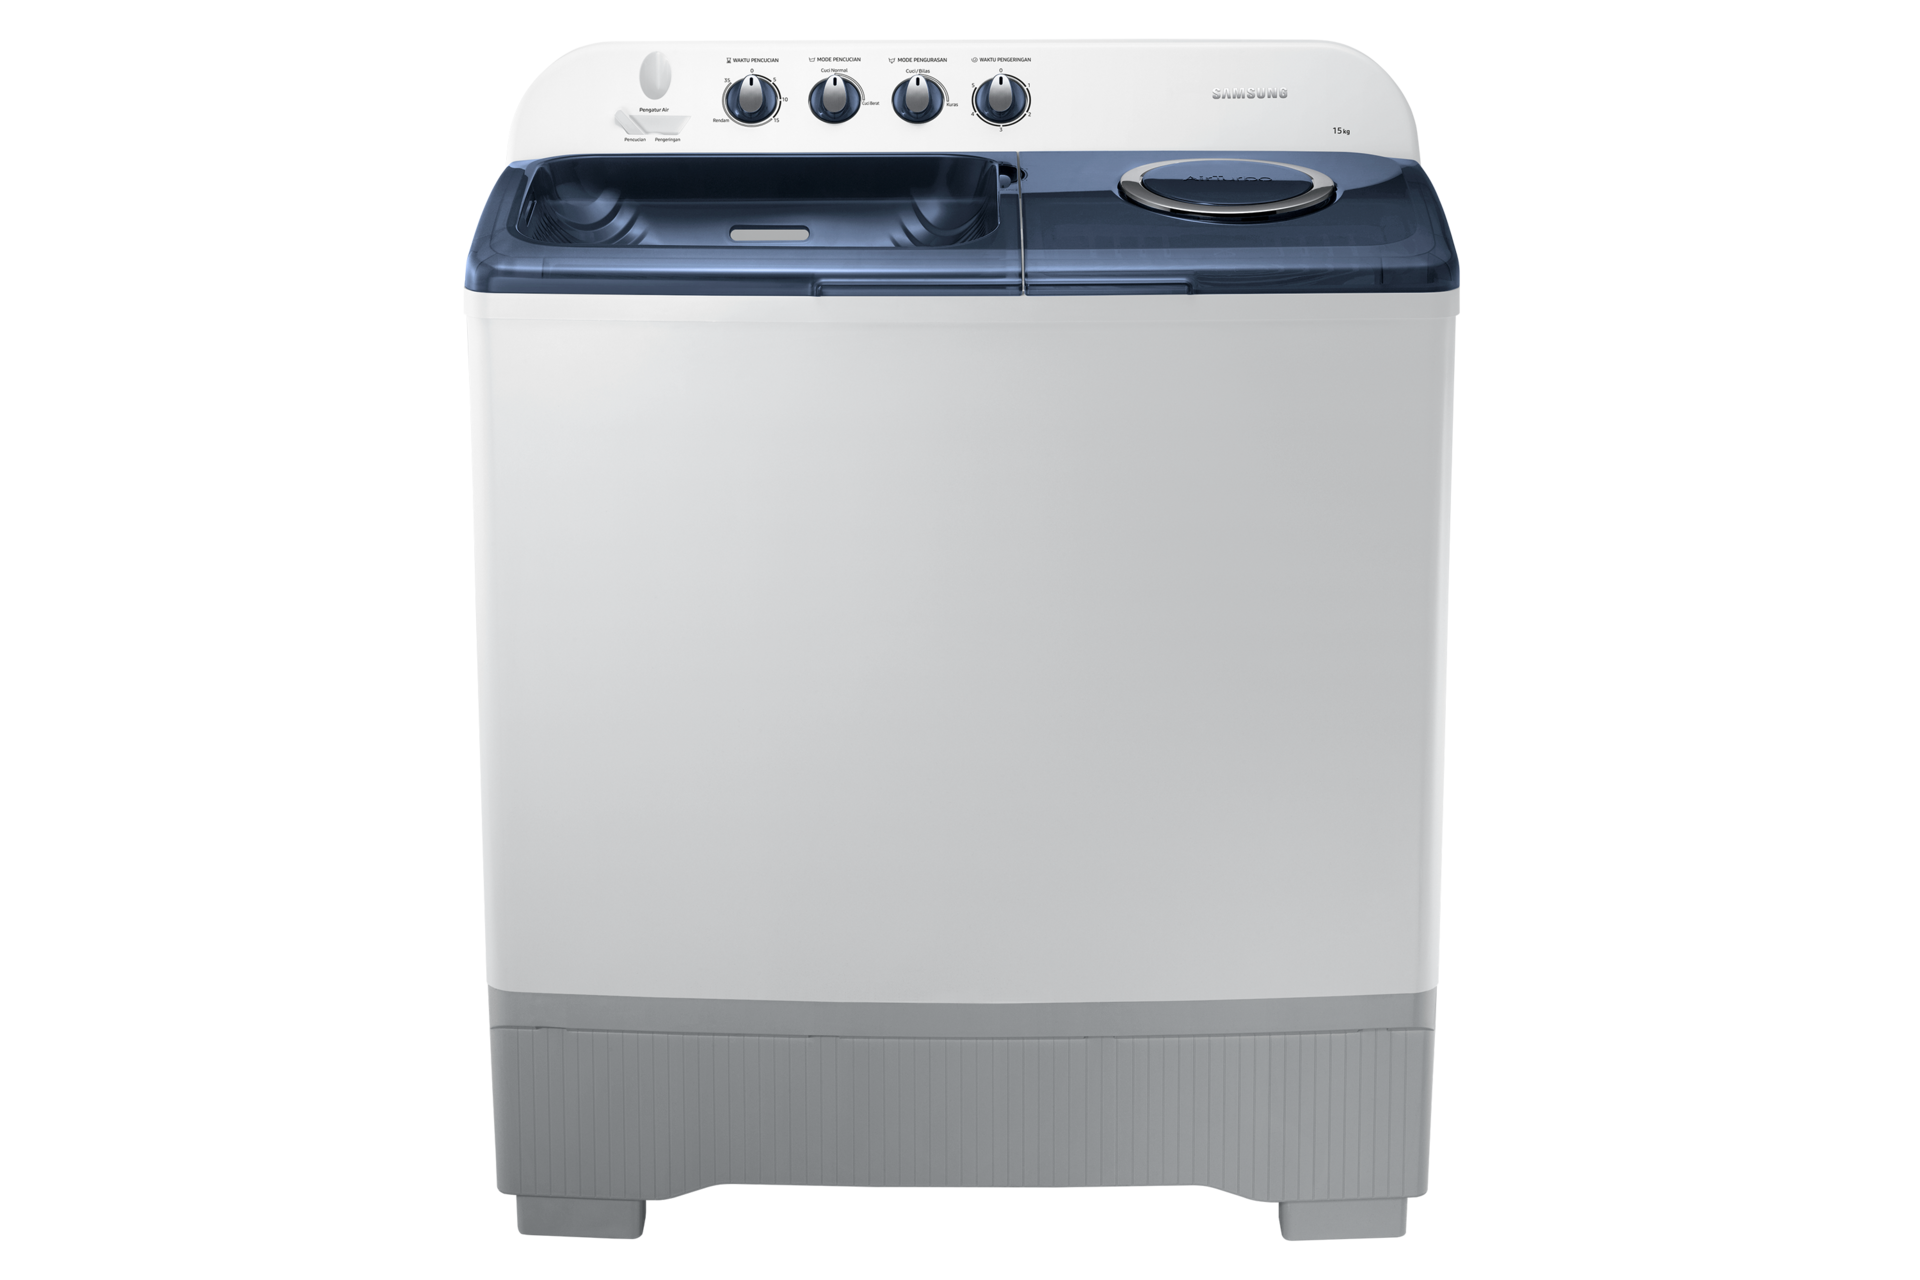 Mesin cuci front loading (WT5200KM) warna putih, tampilan depan